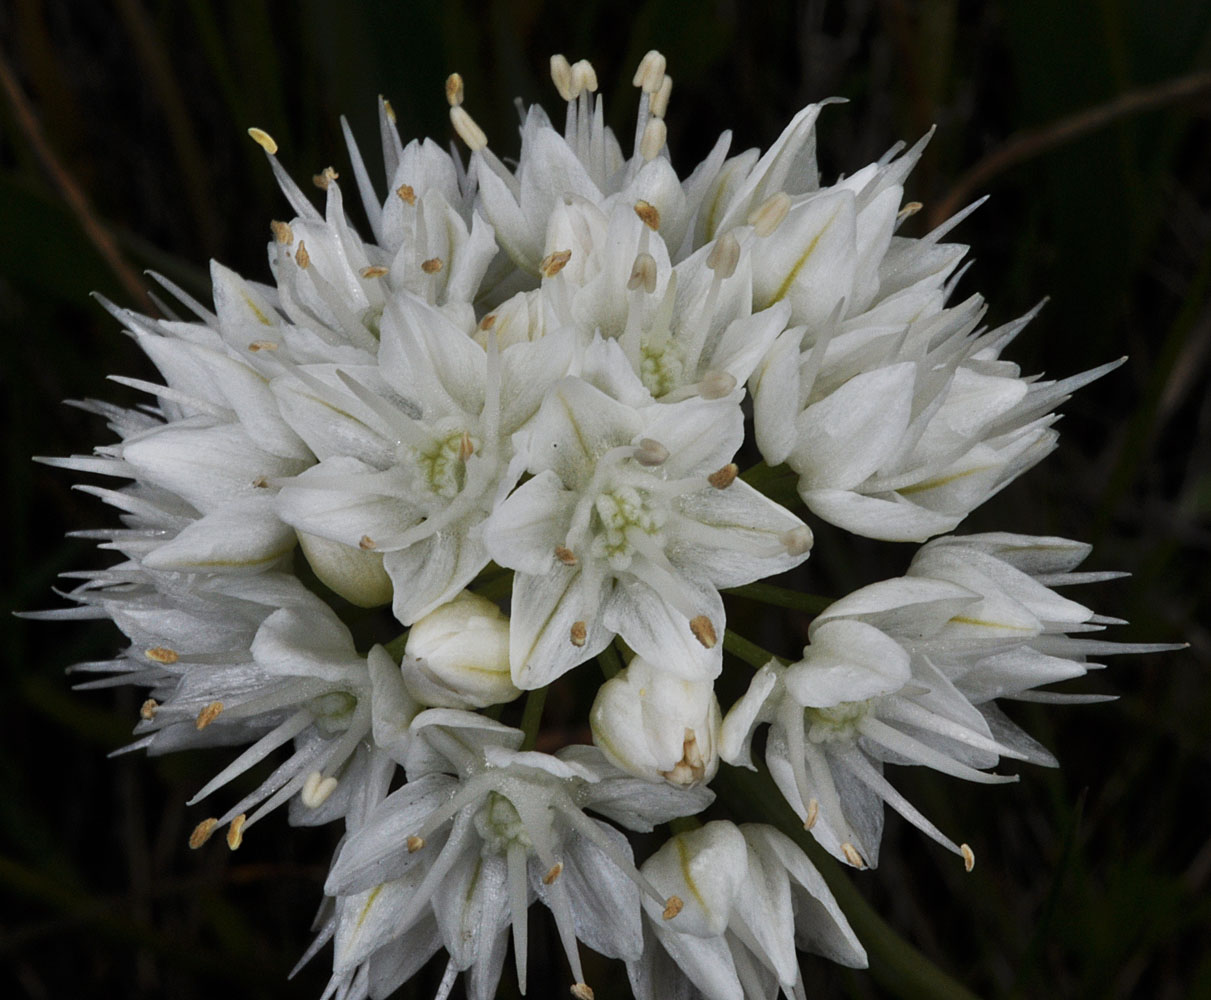 Flora of Eastern Washington Image: Allium nevii